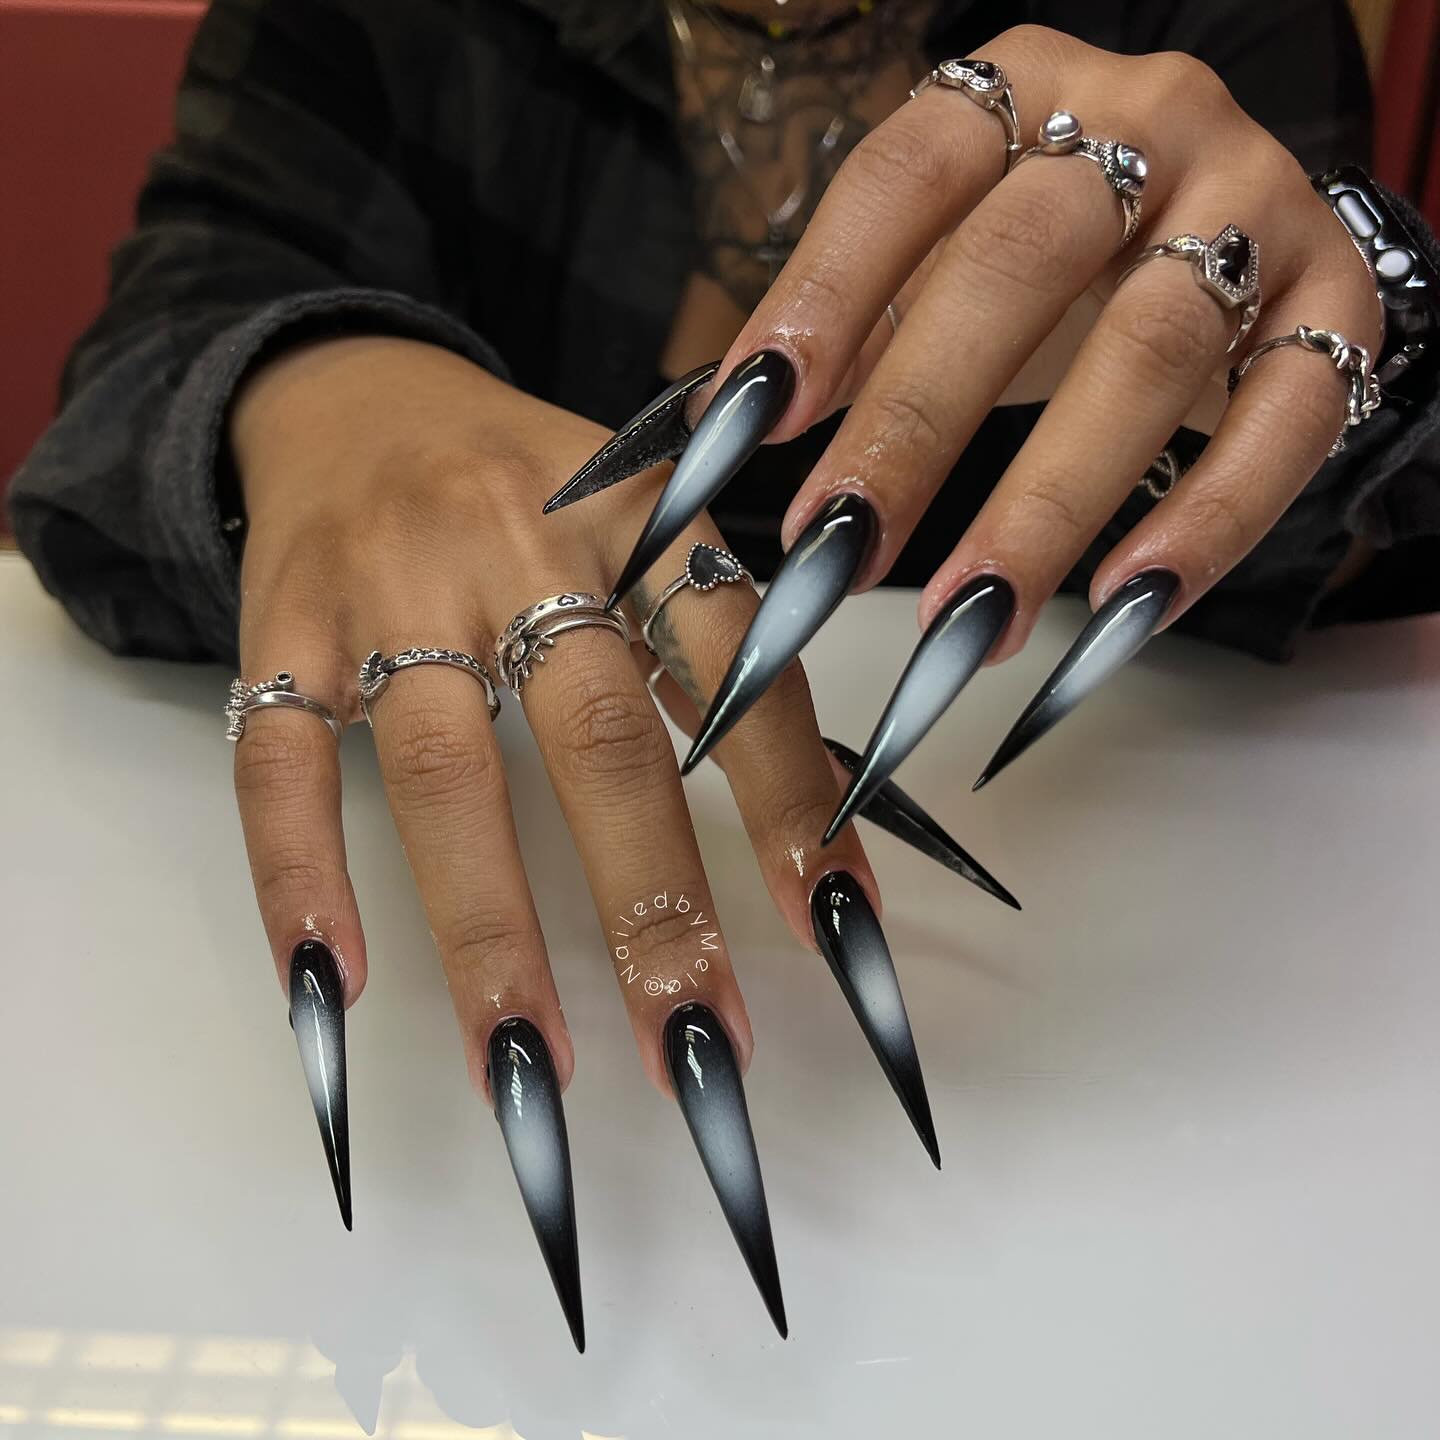 Black airbrushed stiletto nails